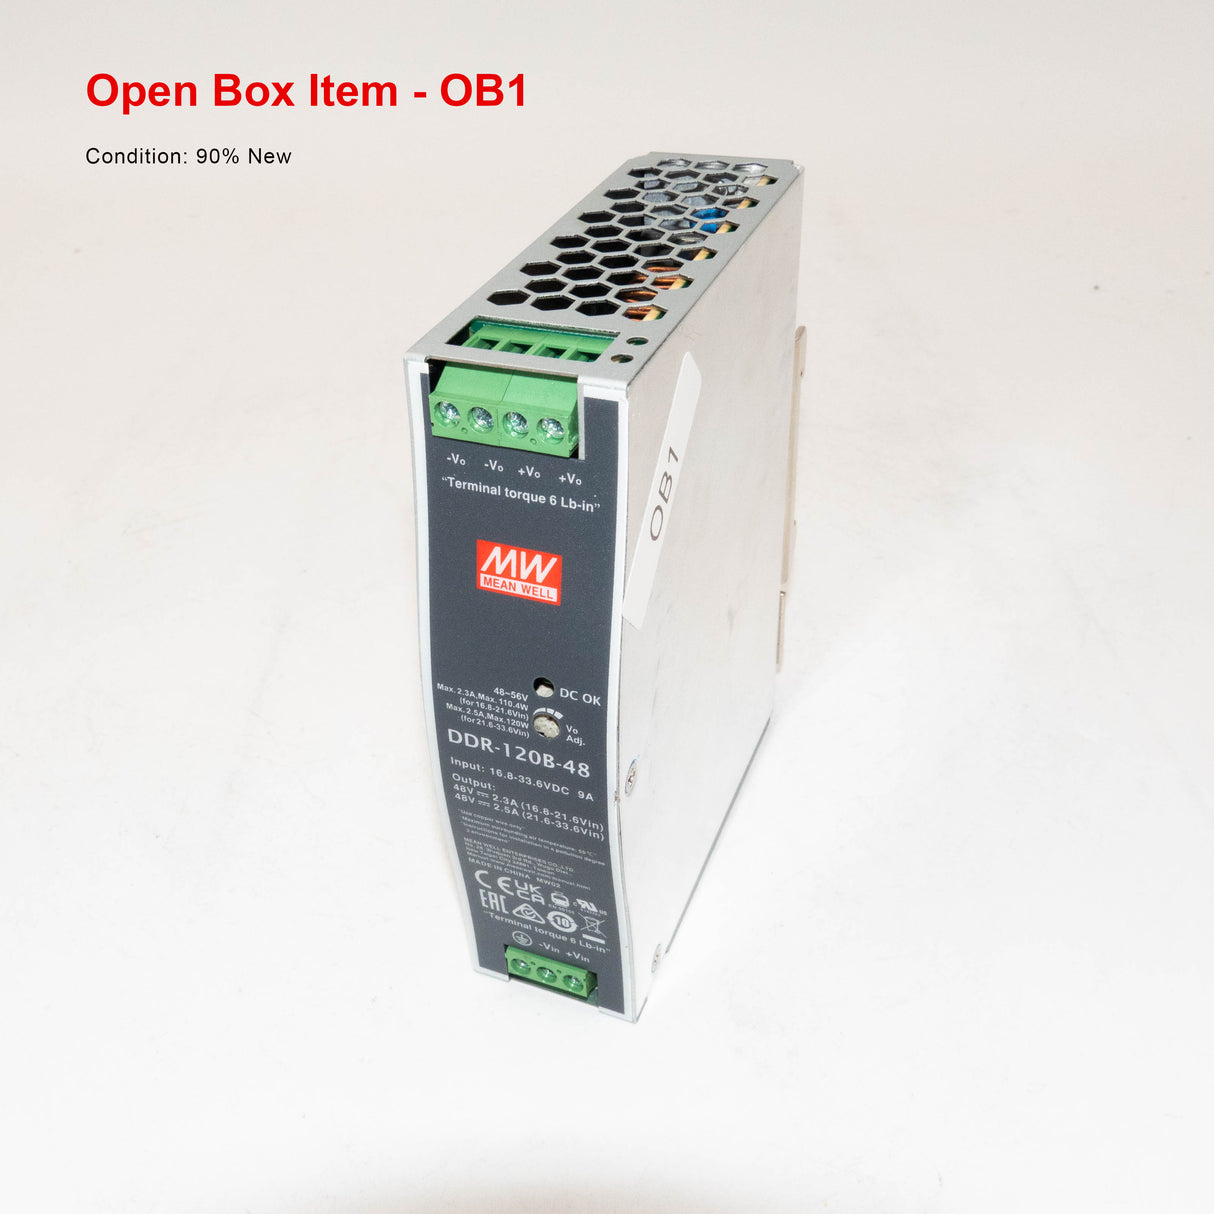 Mean Well DDR-120B-48 DC-DC Converter - 120W - Open Box